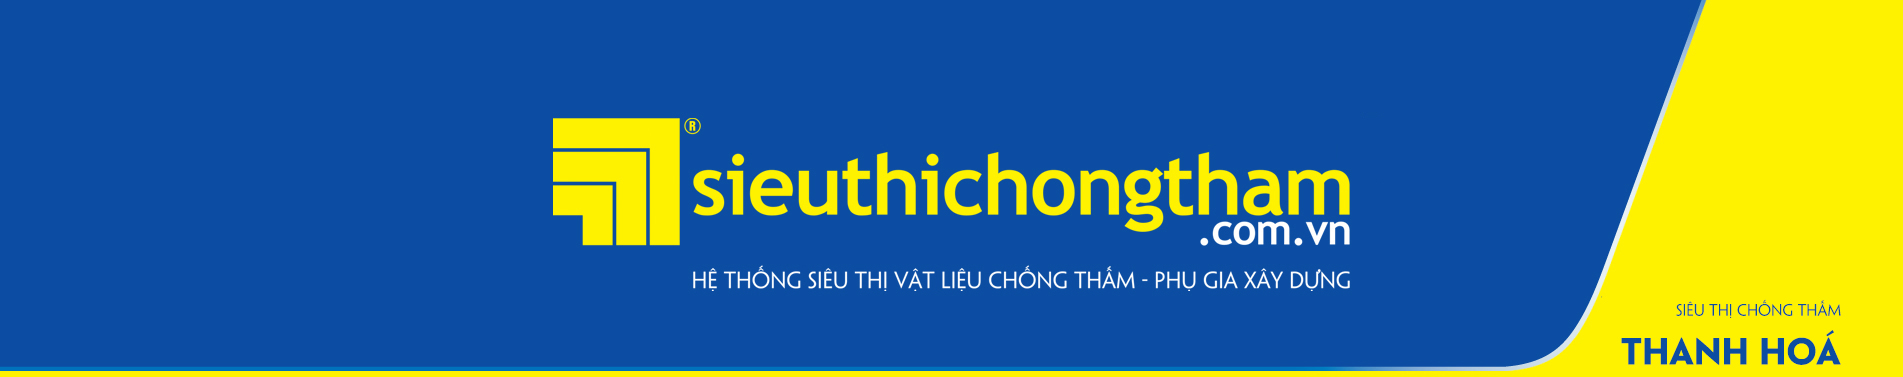 Sieu Thi Chong Tham Thanh Hoa 1